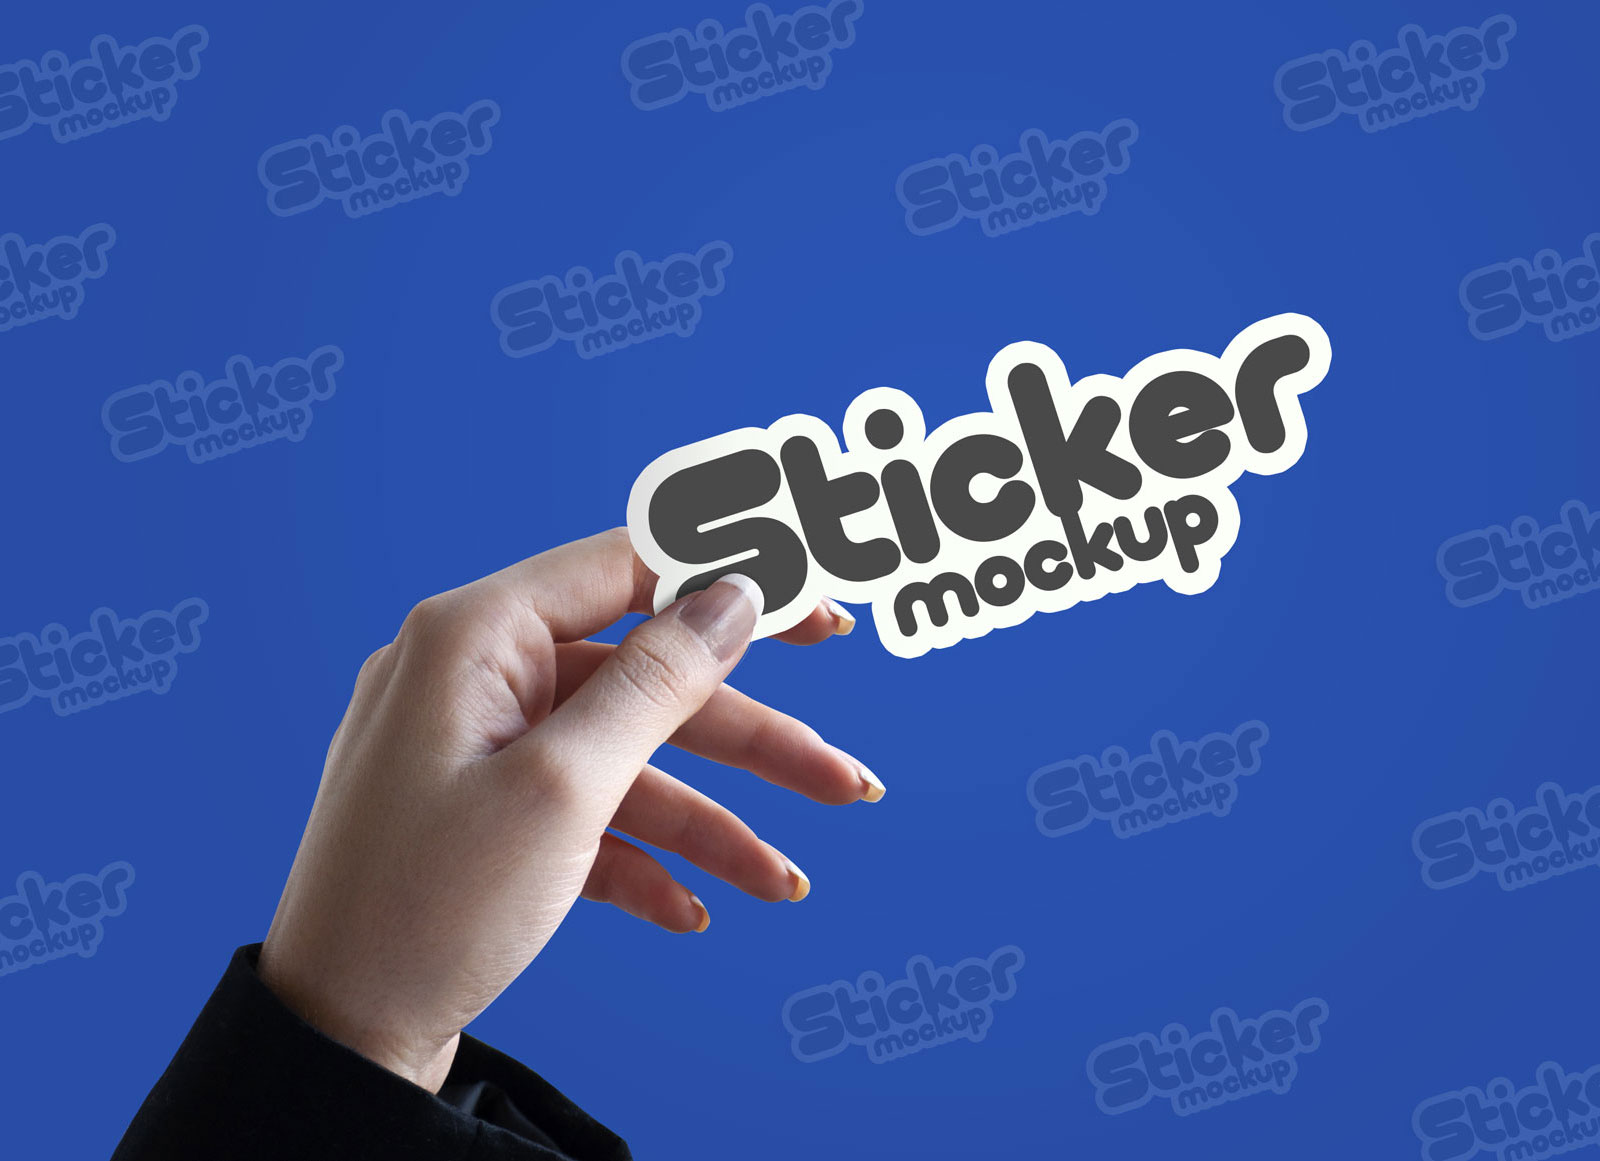 Free-Sticker-Mockup-PSD-3